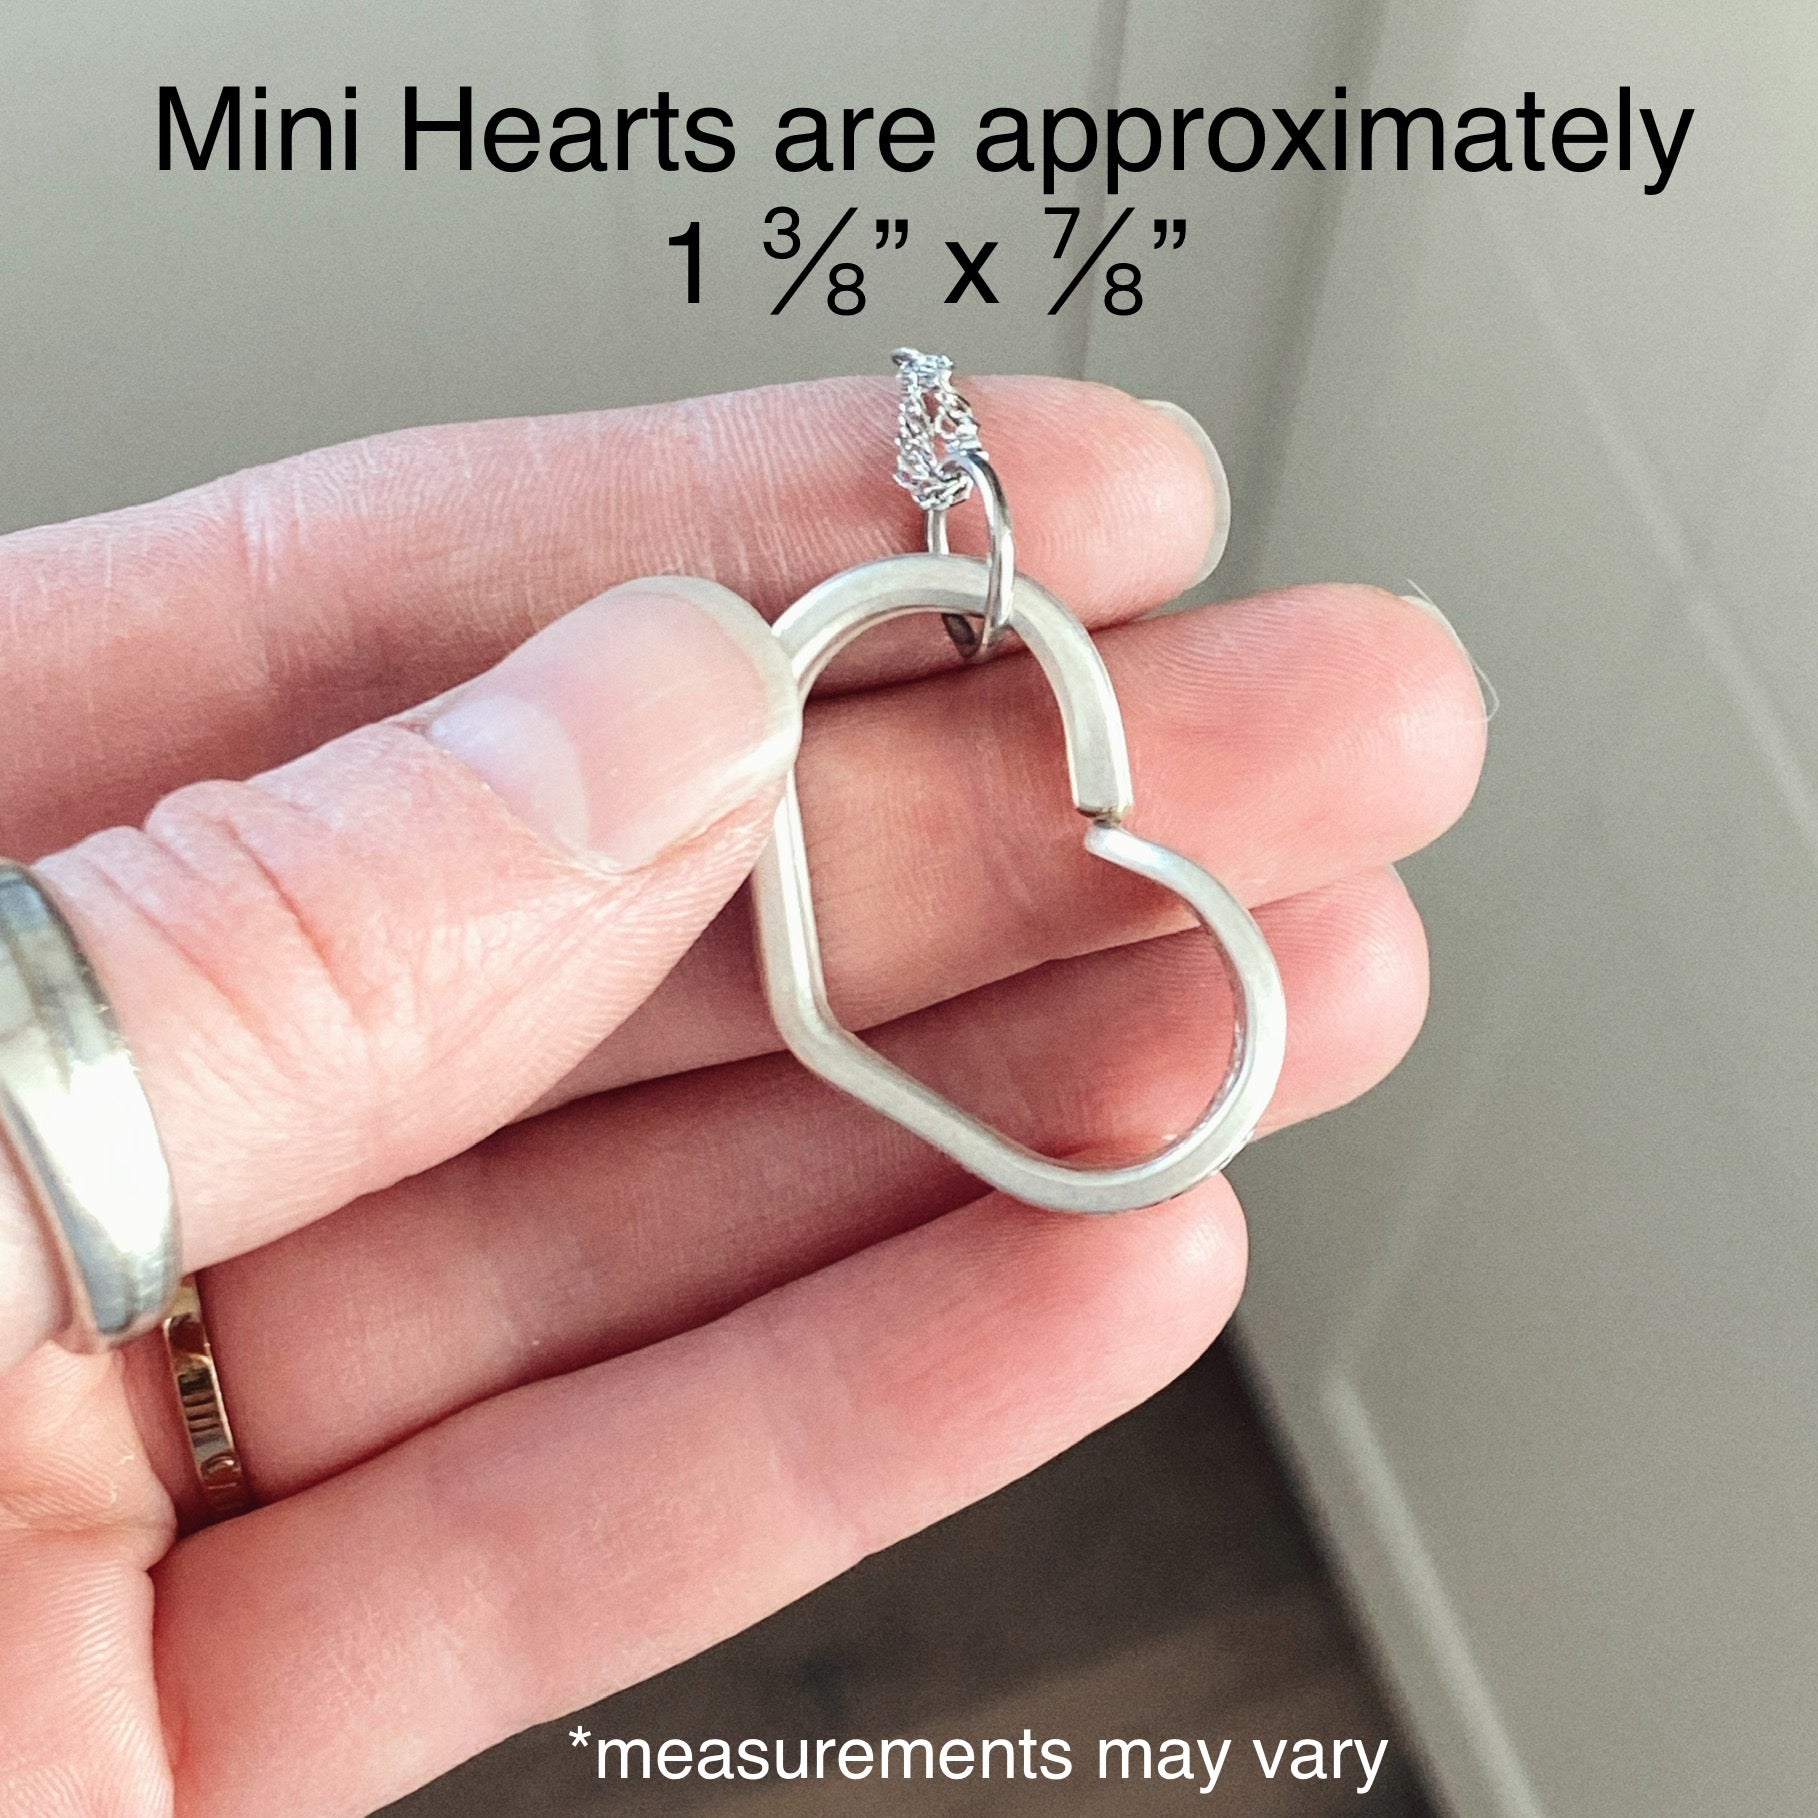 MINI Adam 1917, Mini Floating Heart, Vintage Spoon Jewelry Hearts callistafaye   